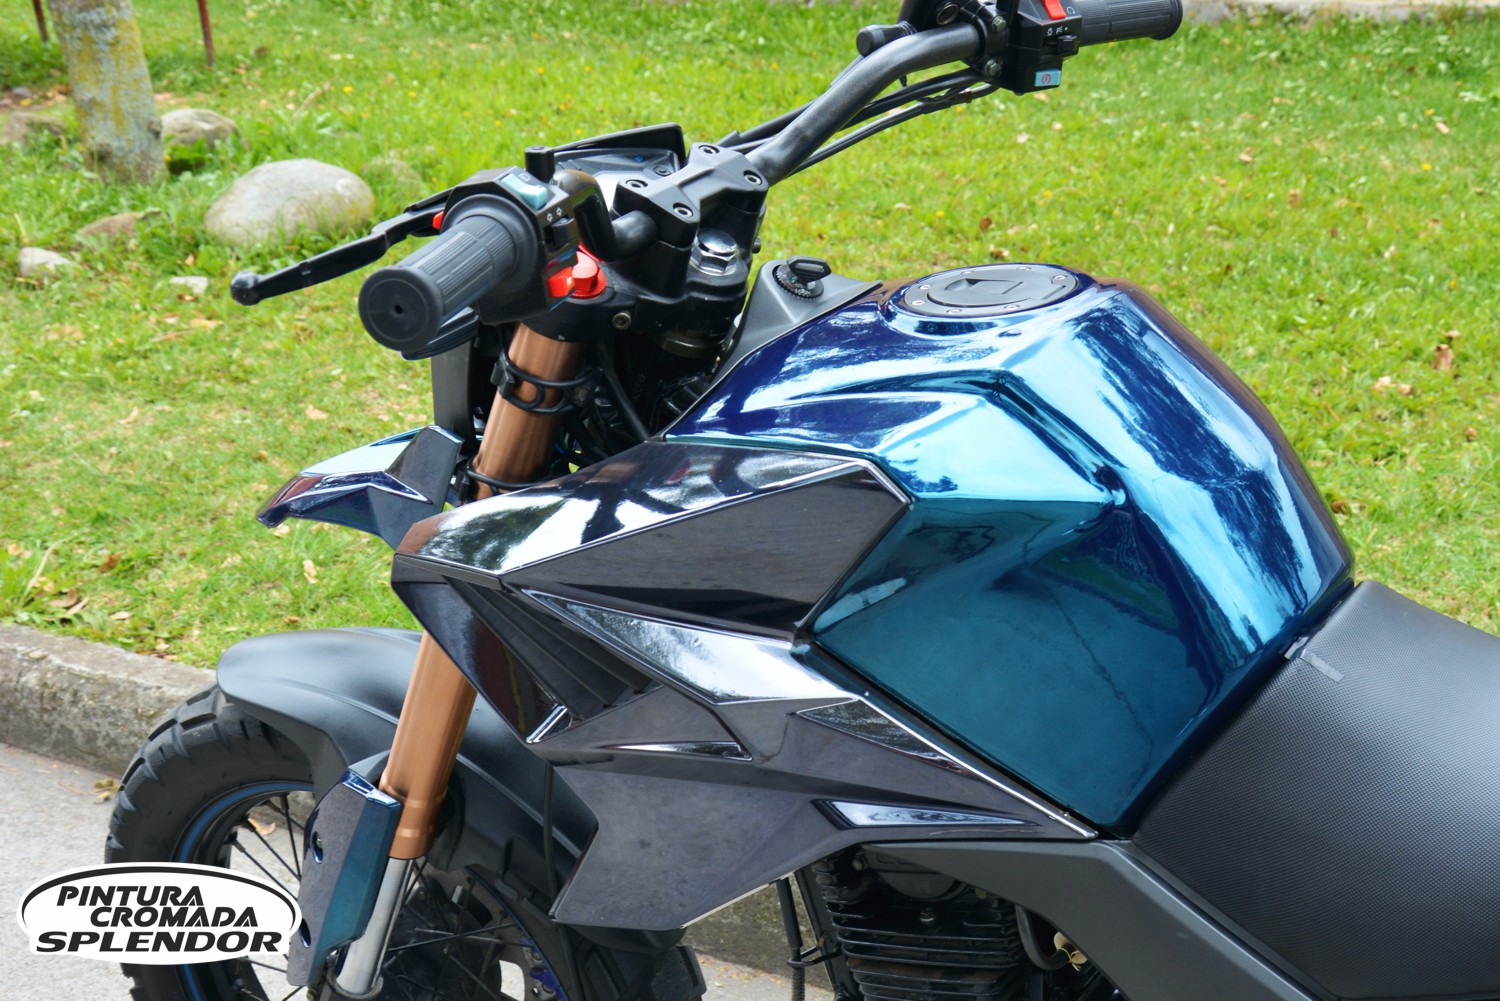 Motocicleta Pintada Cromo Azul Y Negro Pintura Cromada Splendor